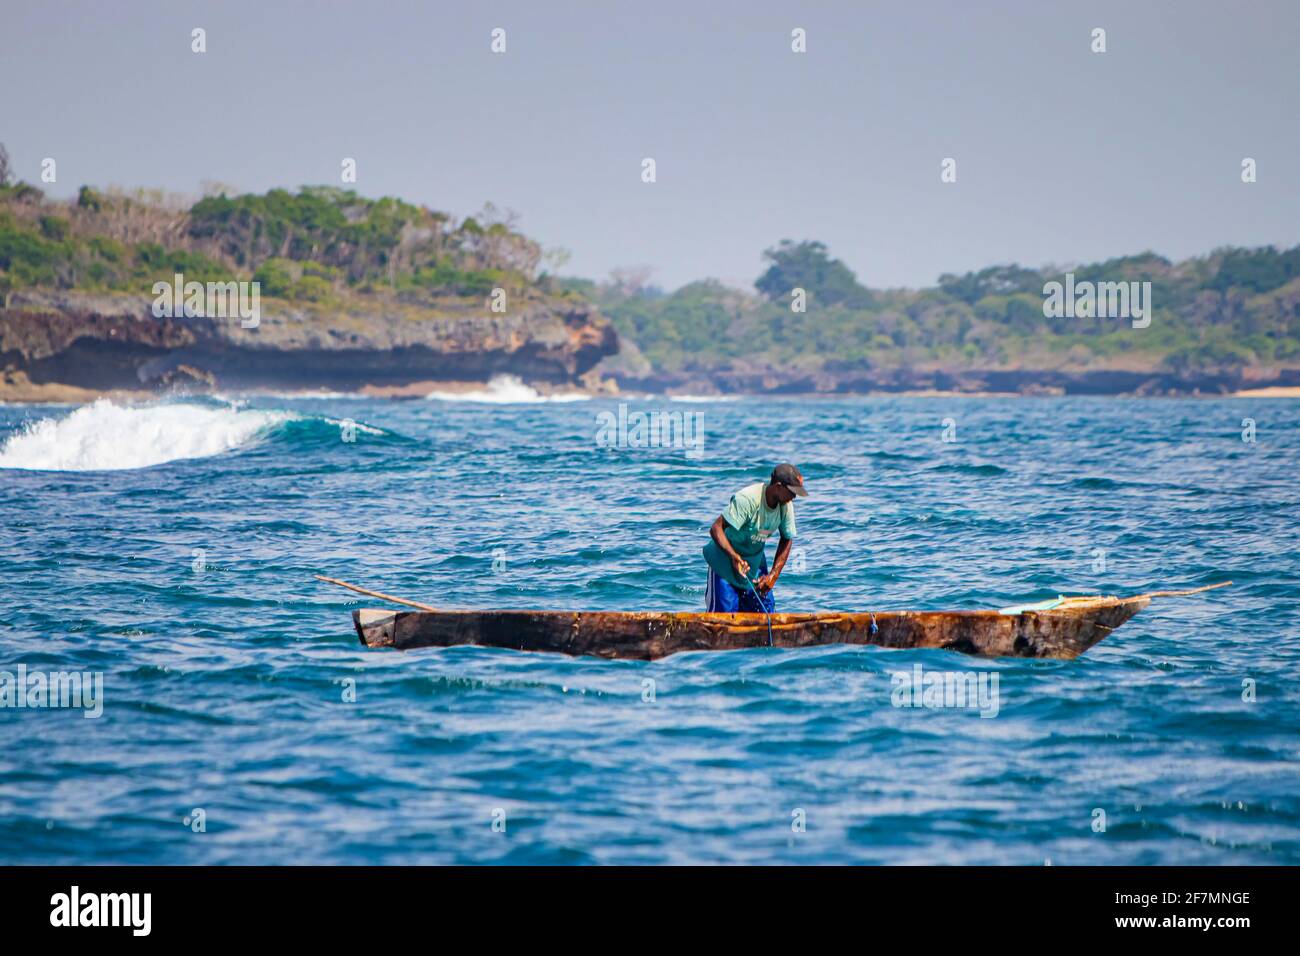 Wasini island, Kenya, AFRICA - February 26, 2020: Fisherman on a typical wooden canoe in the Indian Ocean. Stock Photo